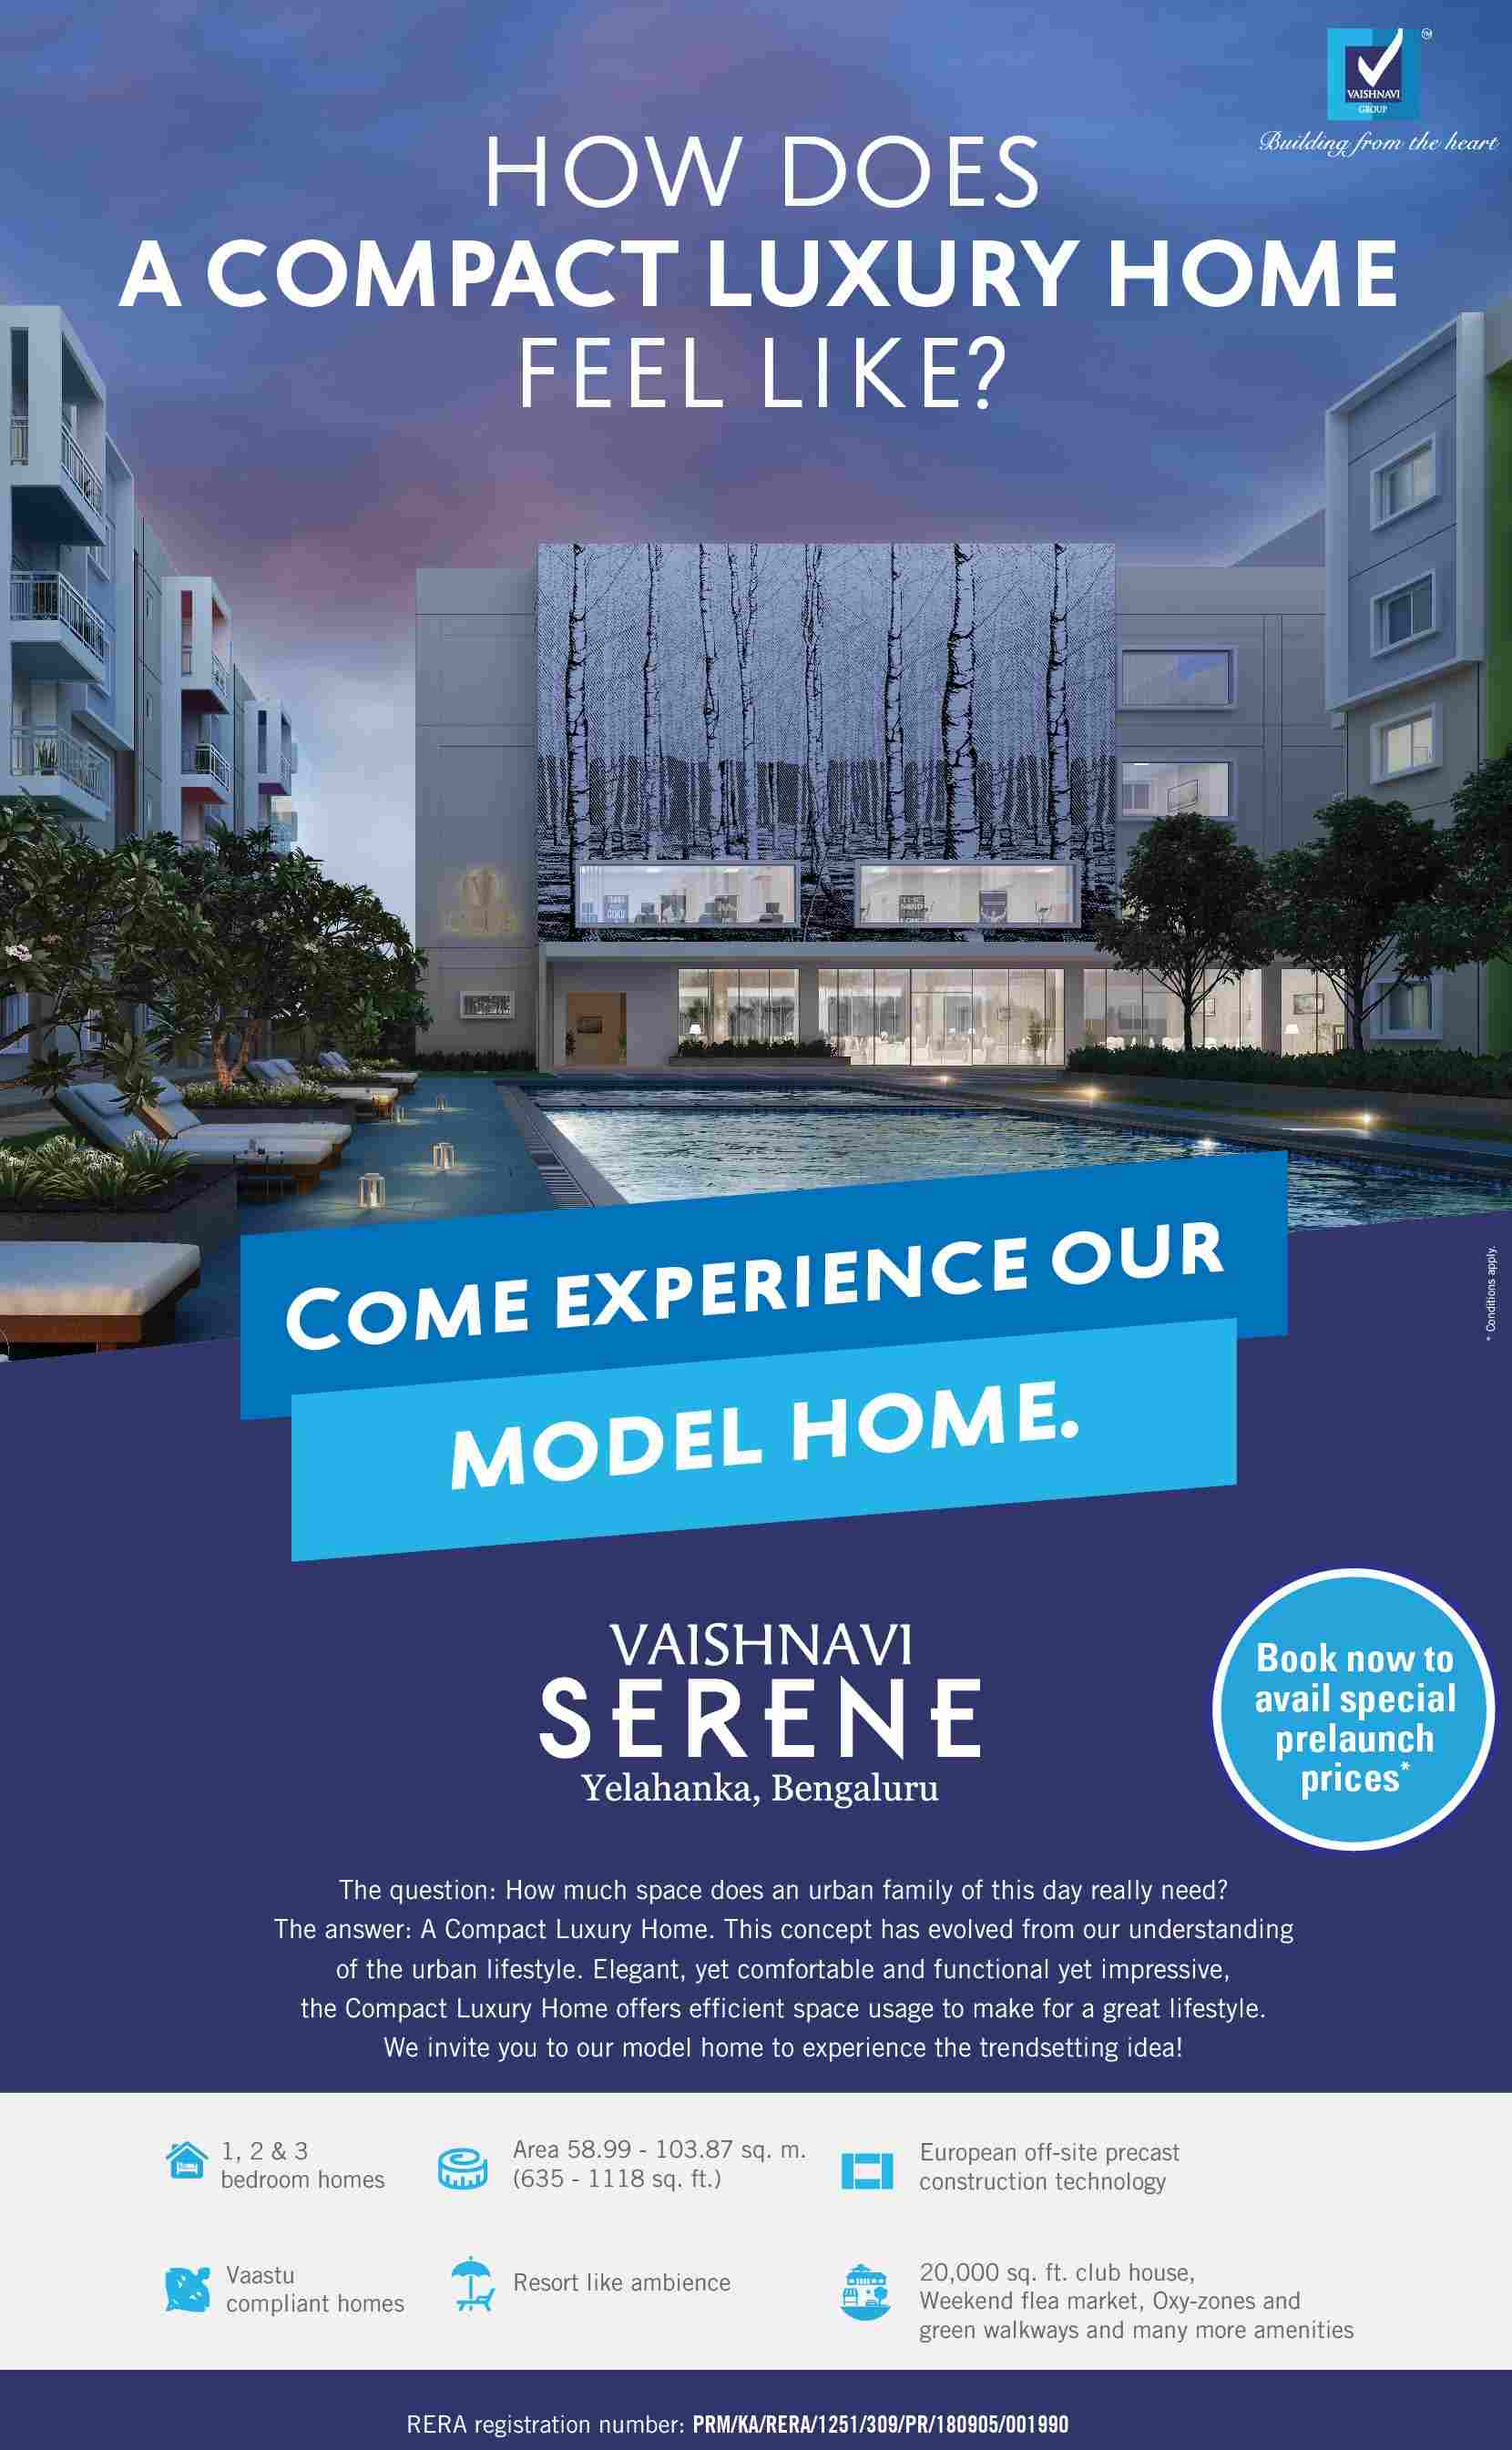 Come and experience model home at Vaishnavi Serene in Yelahanka, Bangalore